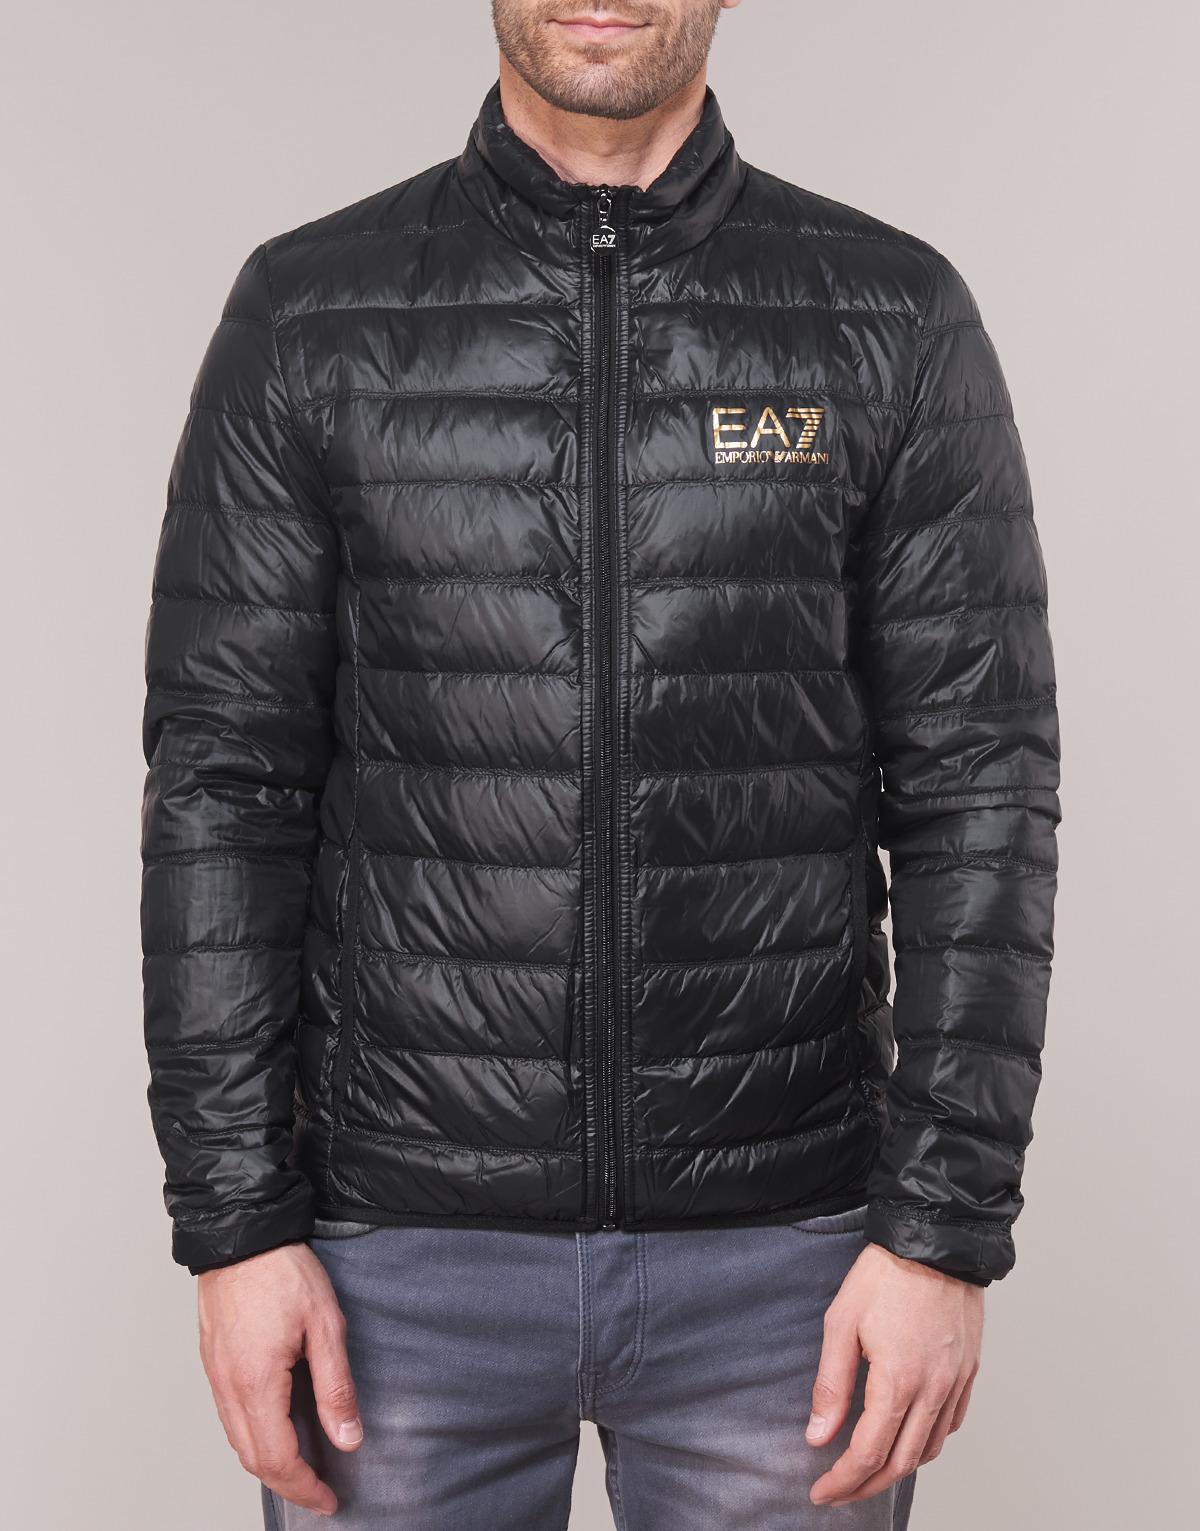 EA7 Down Hooded Jacket in Black for Men - Lyst